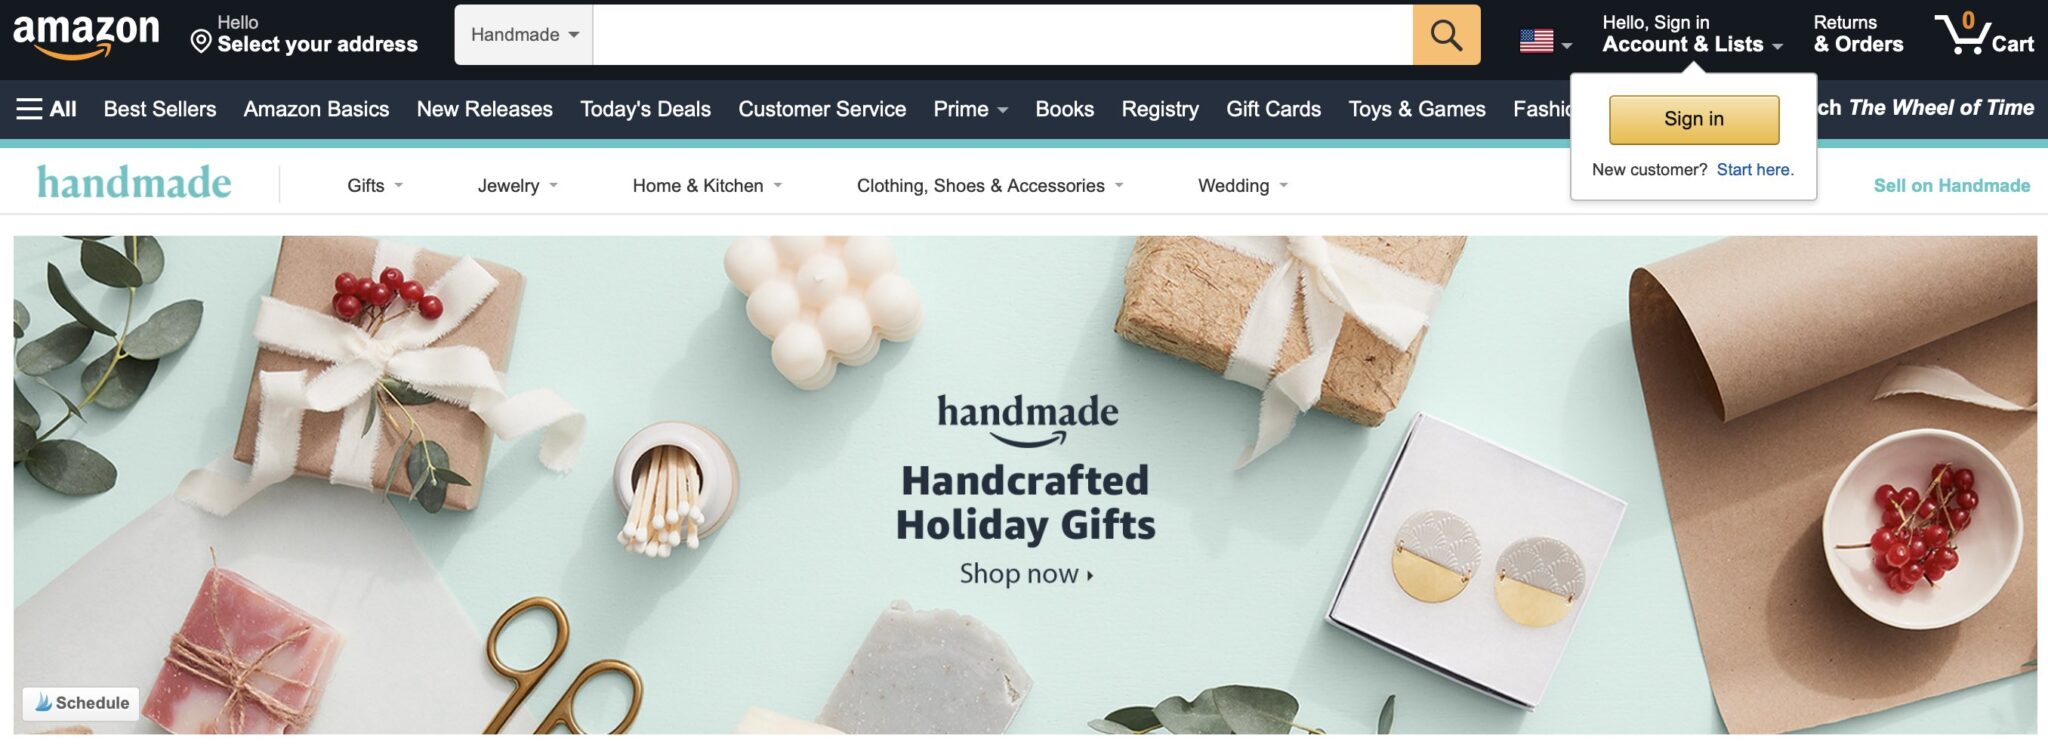 Handmade Amazon Business Opportunities Screenshot